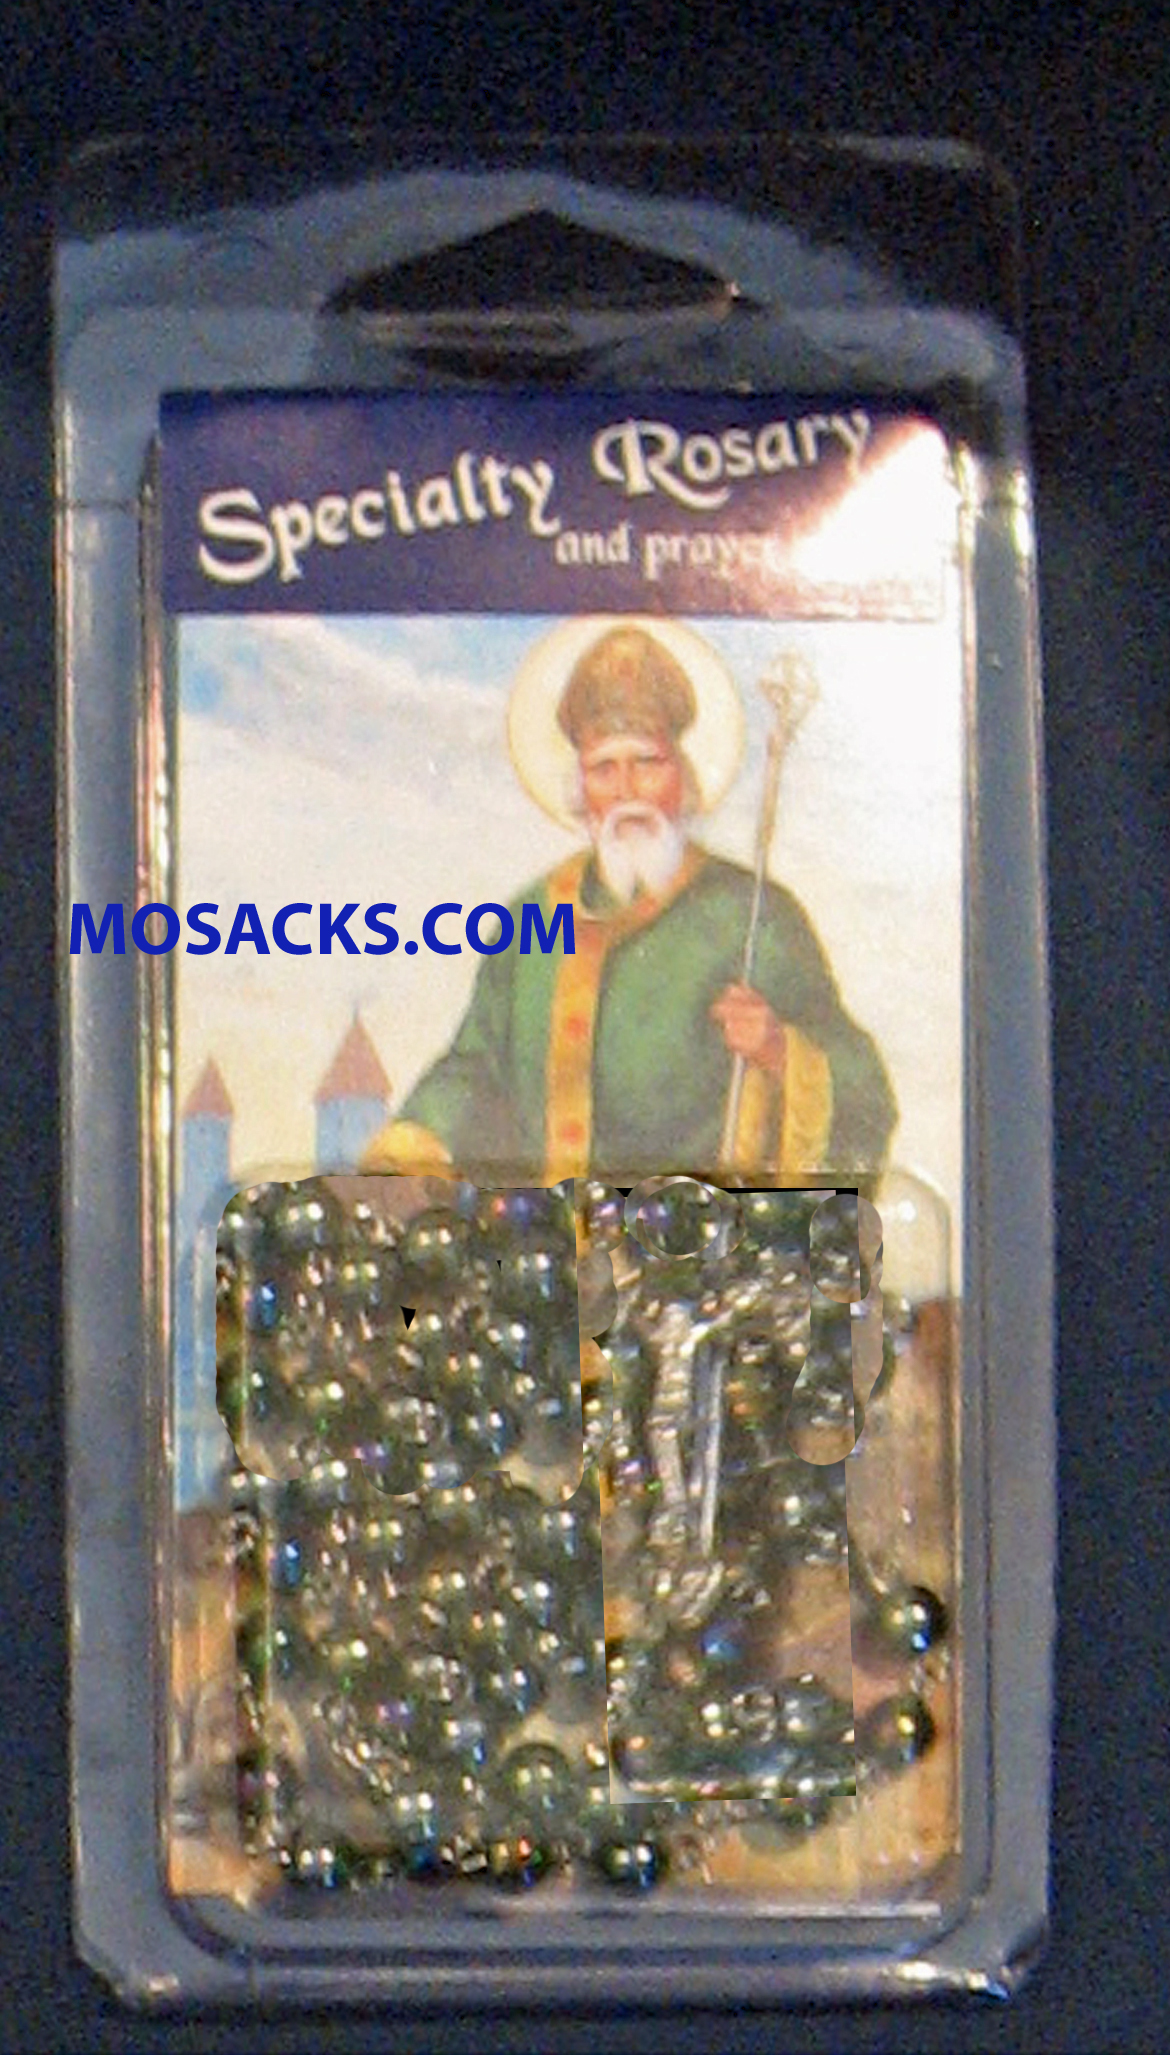 Specialty Rosary St. Patrick Rosary and Prayer Card